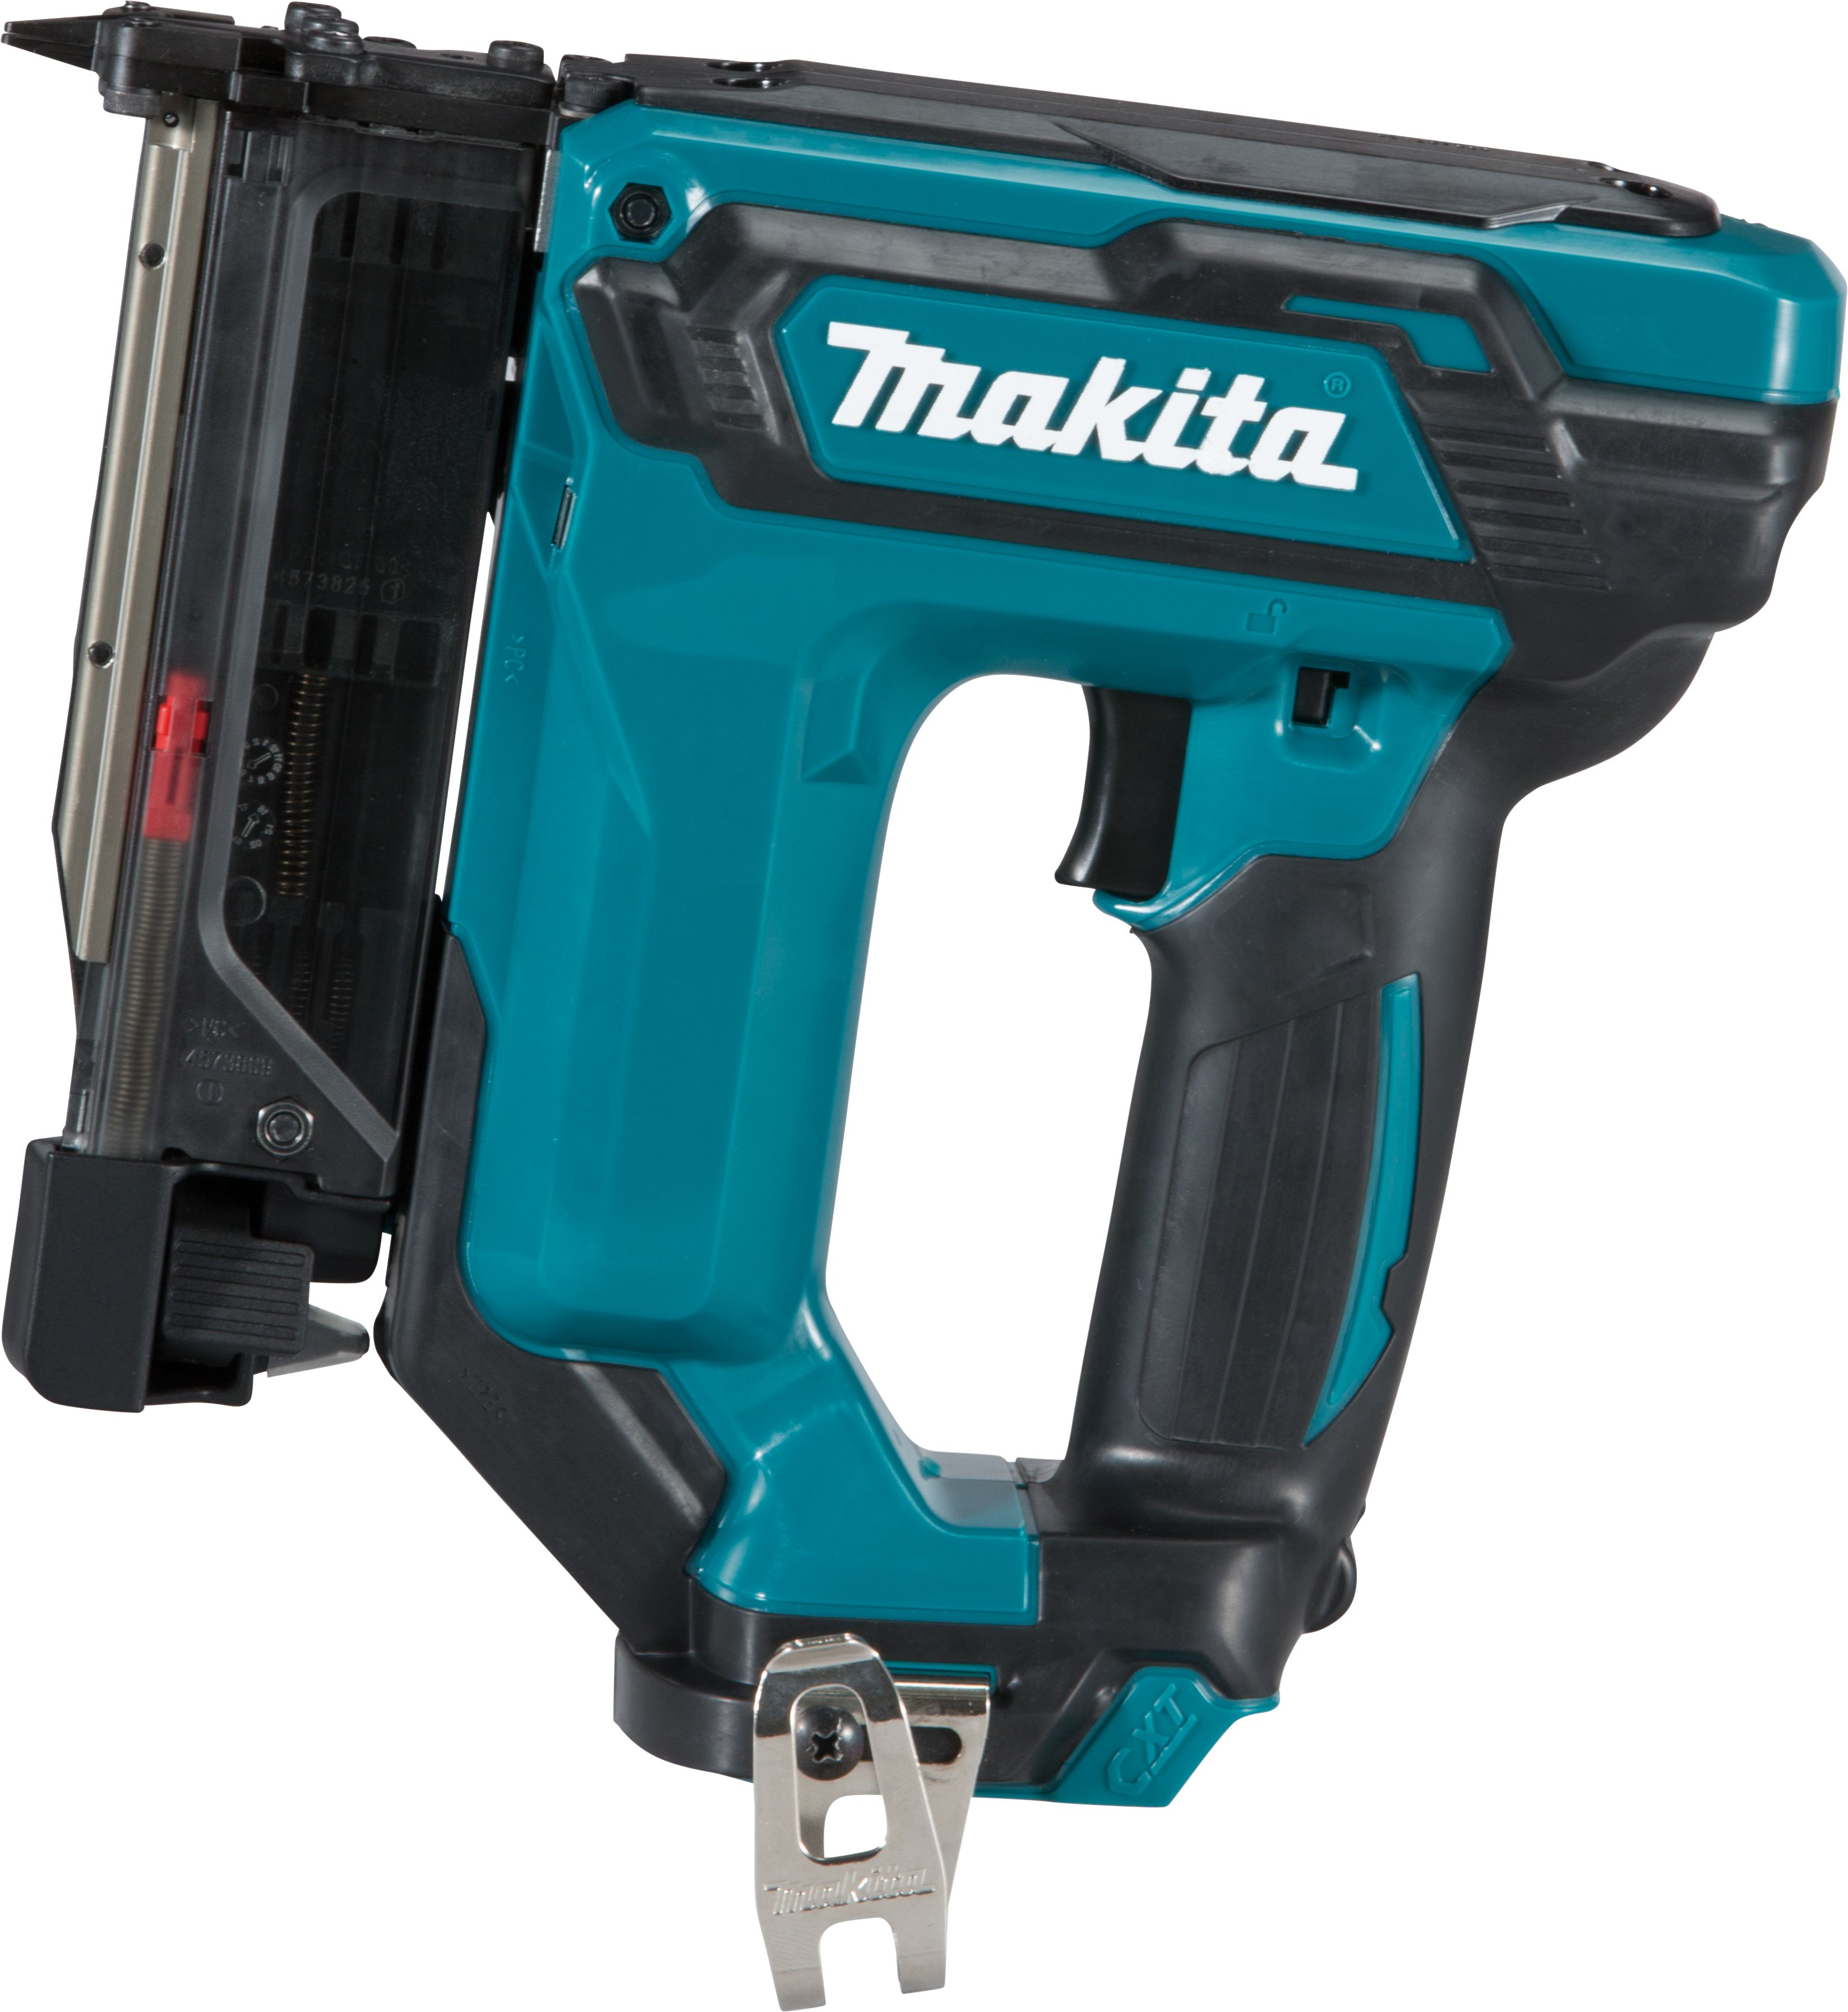 Makita 35mm 12V Li-ion CXT Cordless Nailer (Bare Tool) - PT354DZ